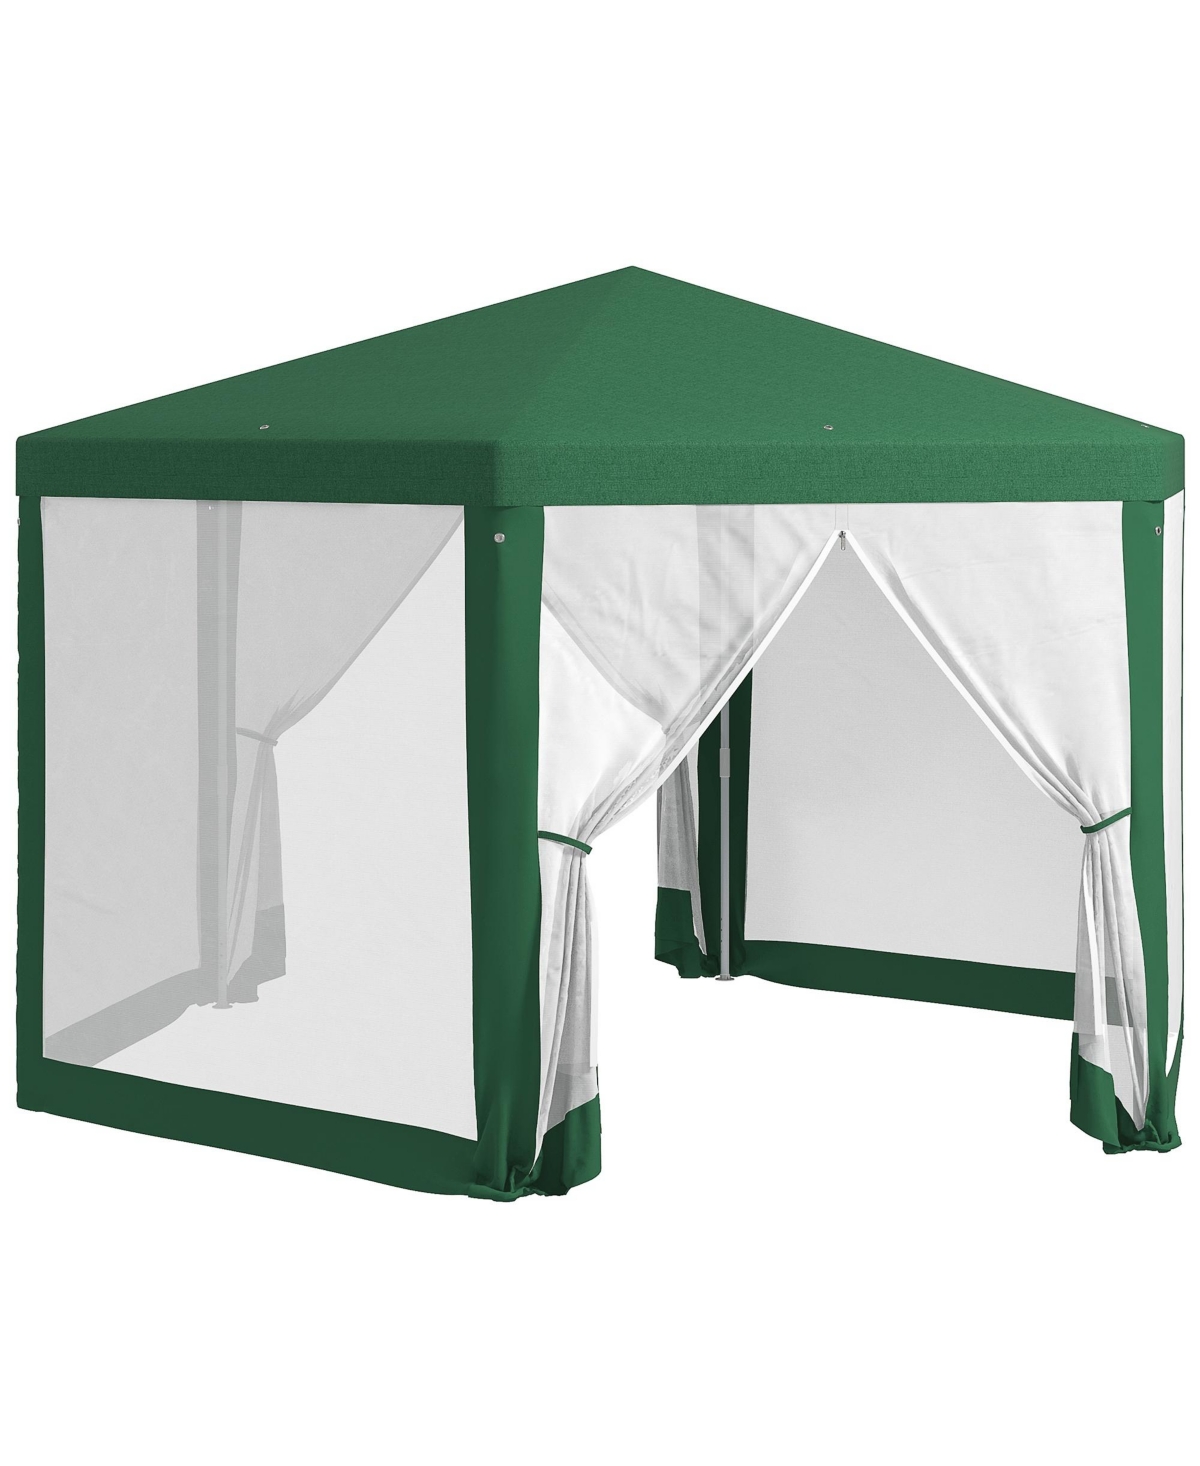 13' x 11' Garden Party Tent, Hexagon Patio with Netting, Green - Green